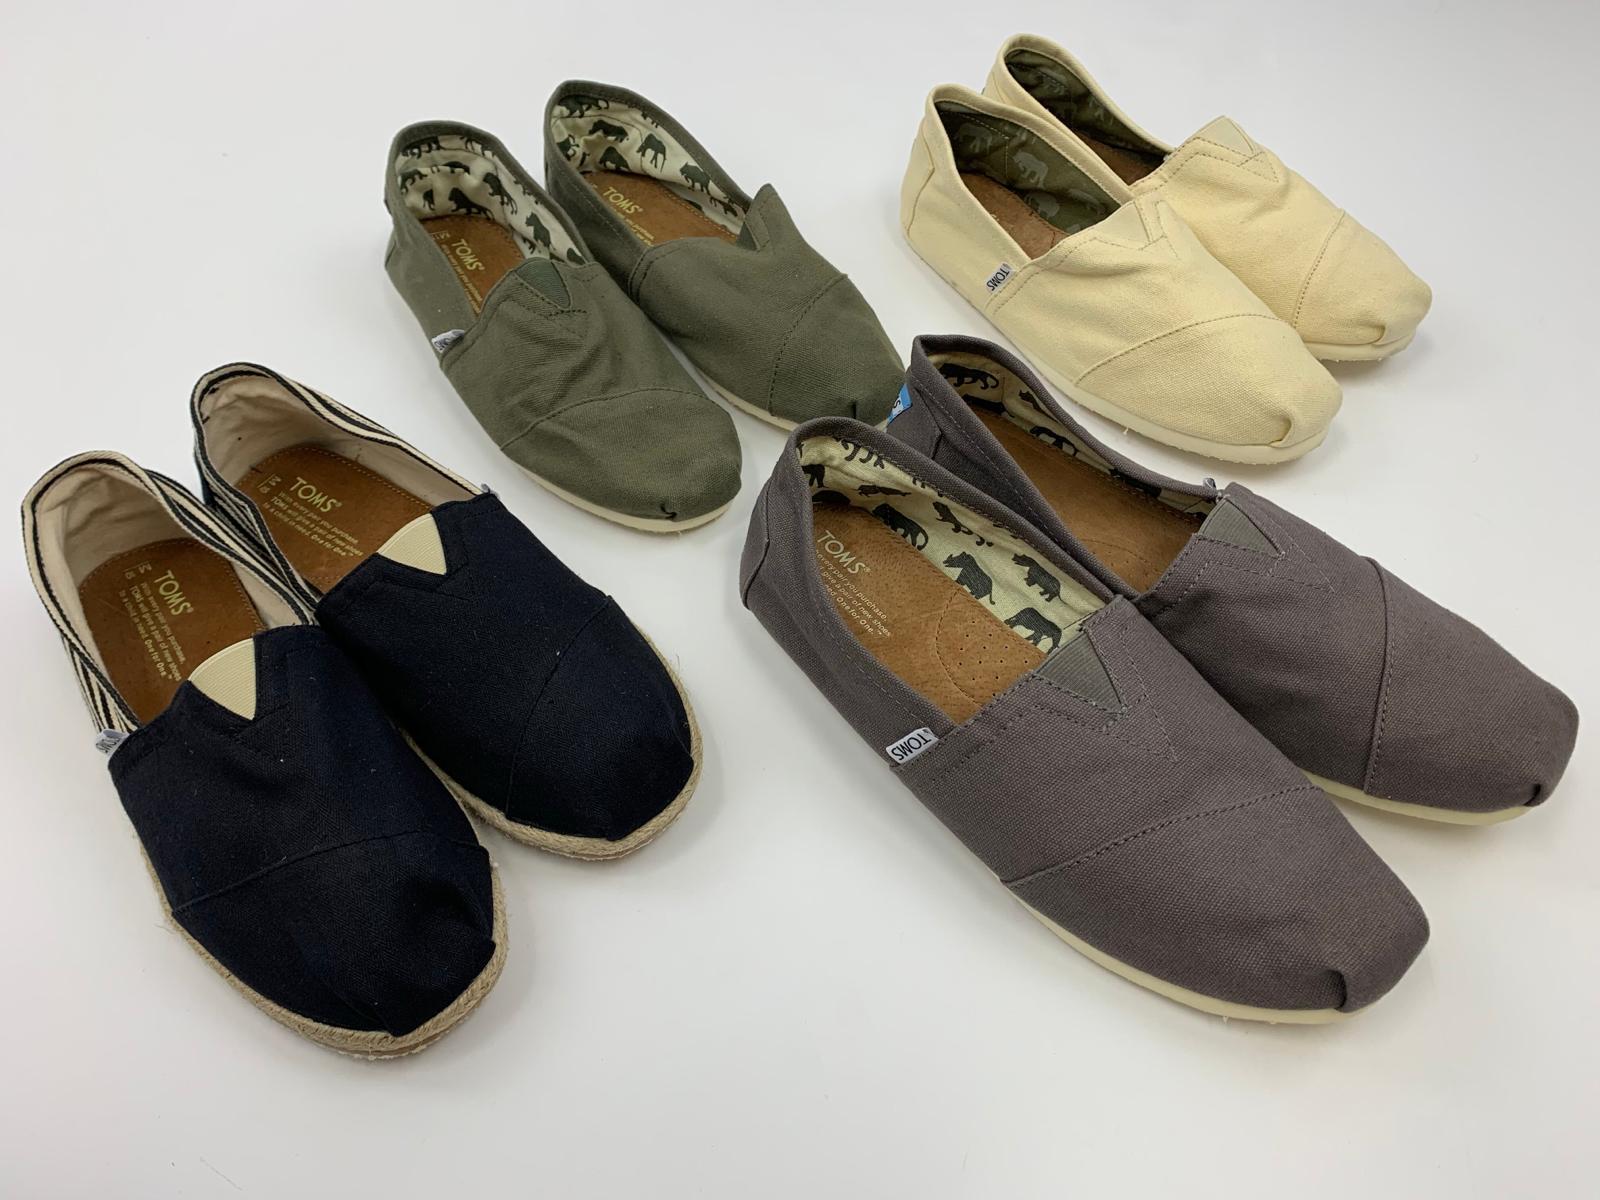 TOM'S Men Shoes on SALE USAStock offers | GLOBAL STOCKS